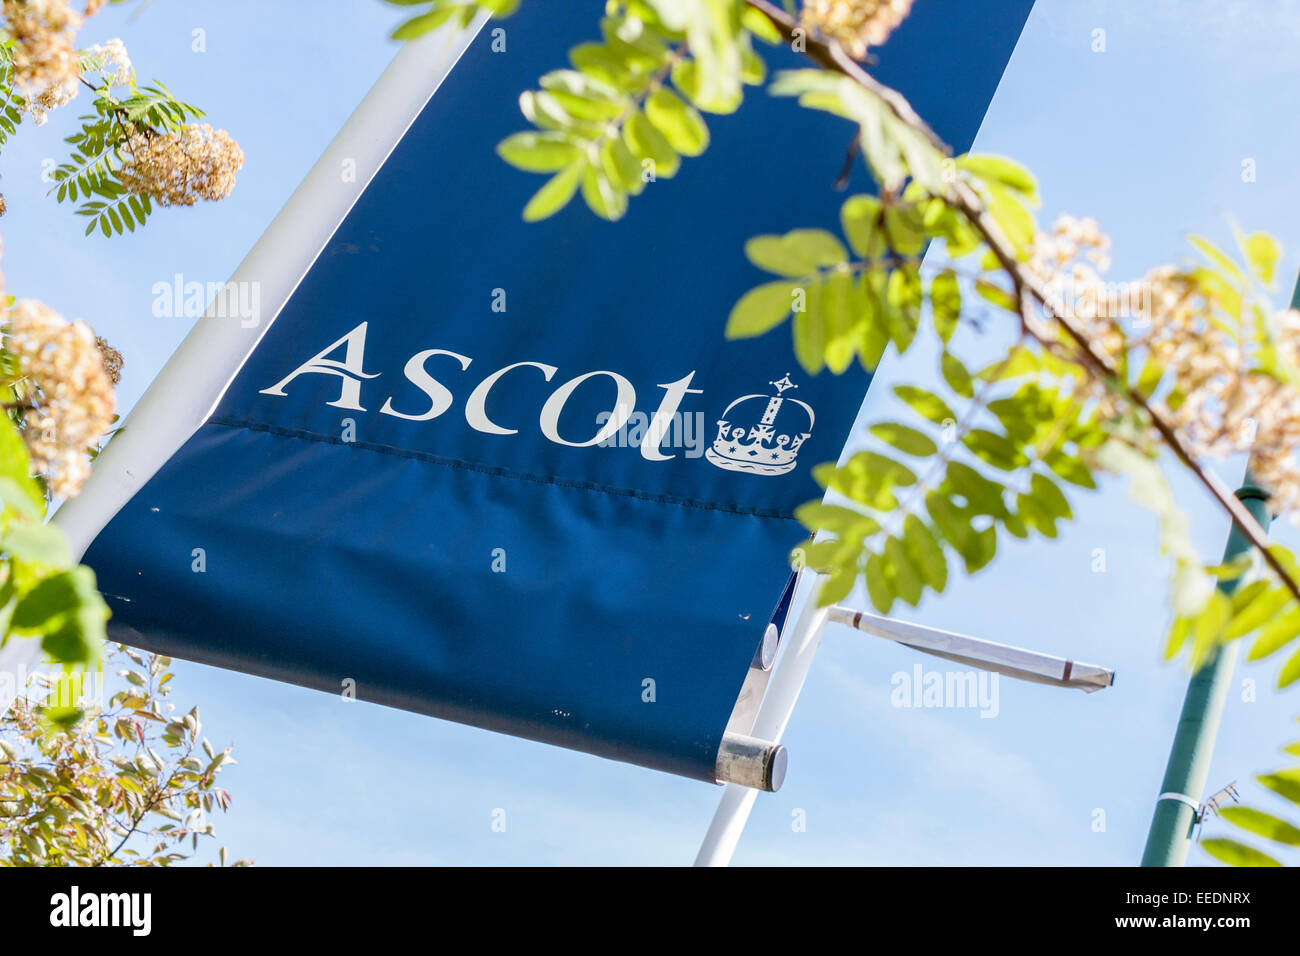 Banner outside Ascot racecourse, Ascot, Berkshire, England, GB, UK Stock Photo